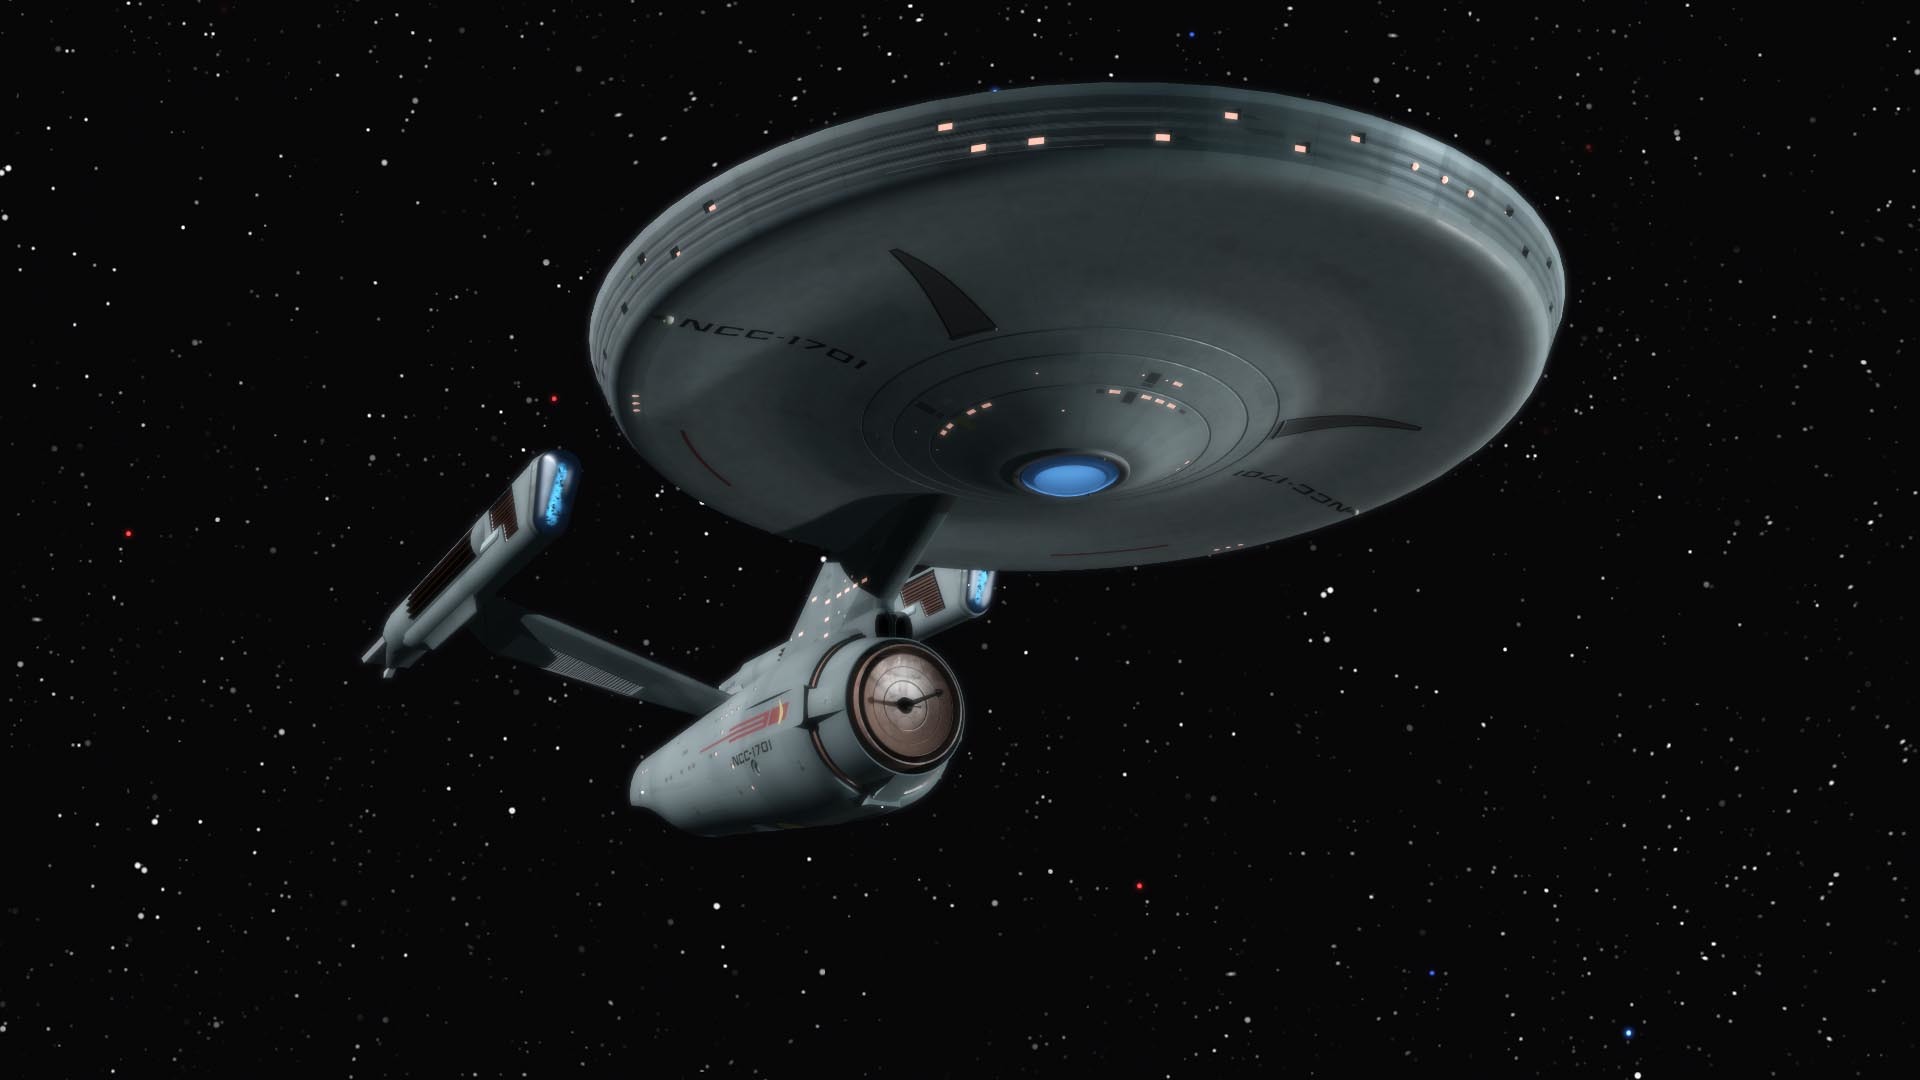 Star Trek: New Voyages